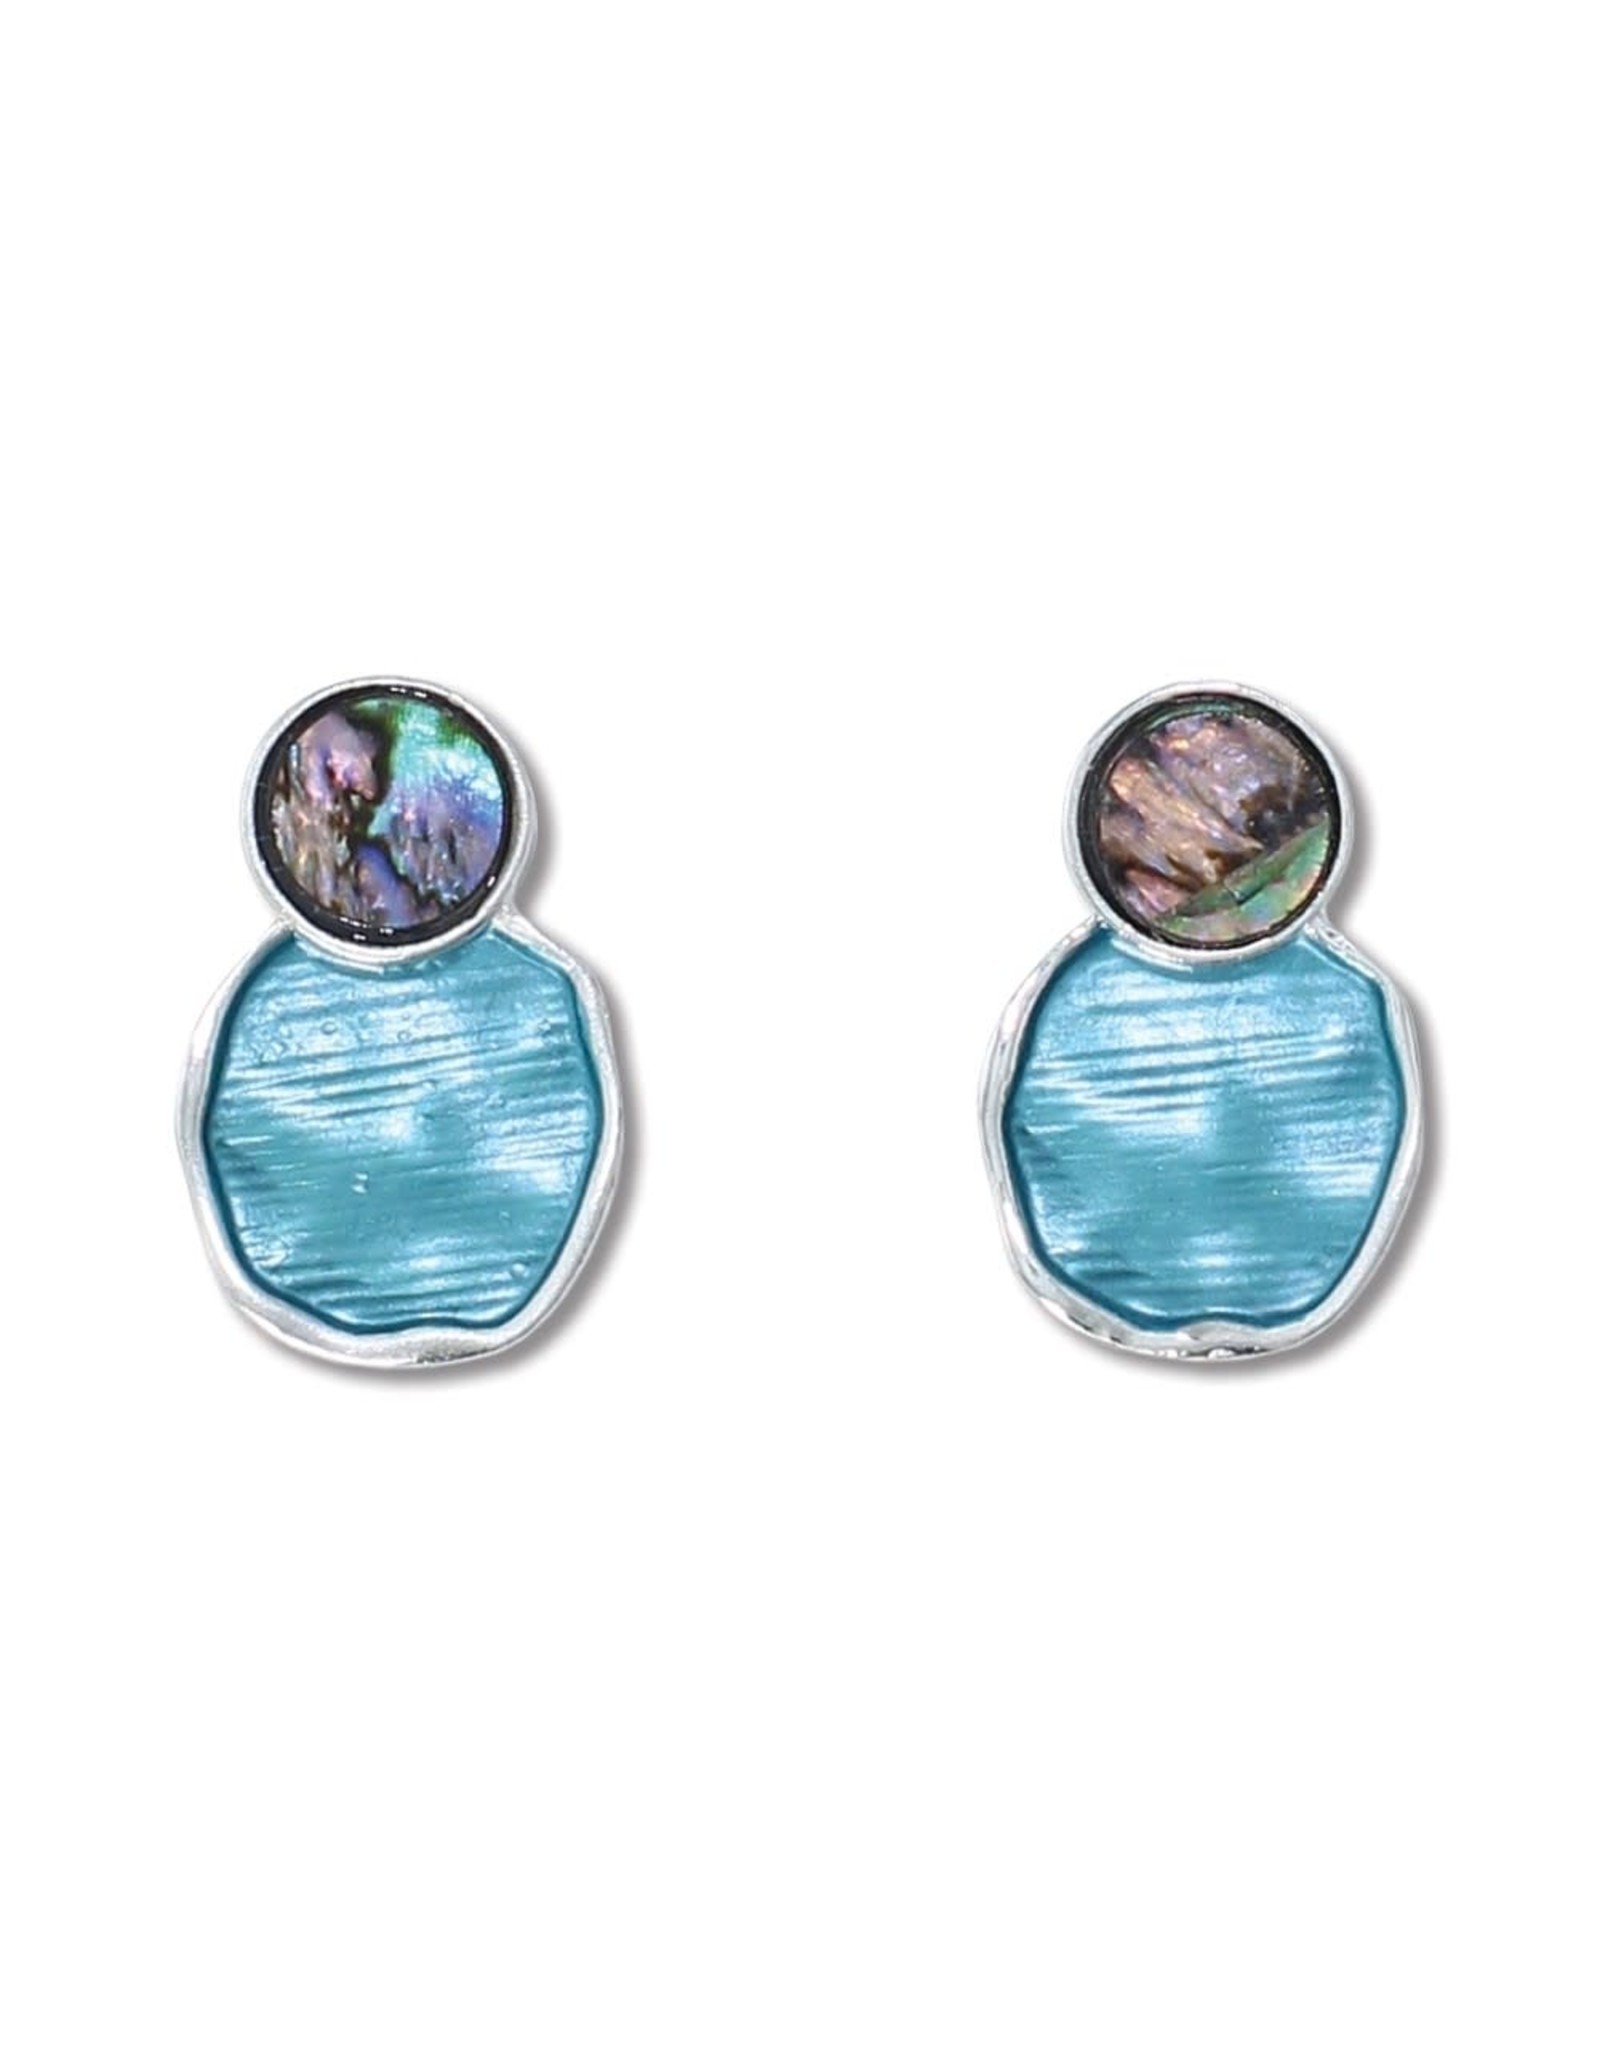 Periwinkle by Barlow Earrings Silver W Abalone And Blue Enamel Post